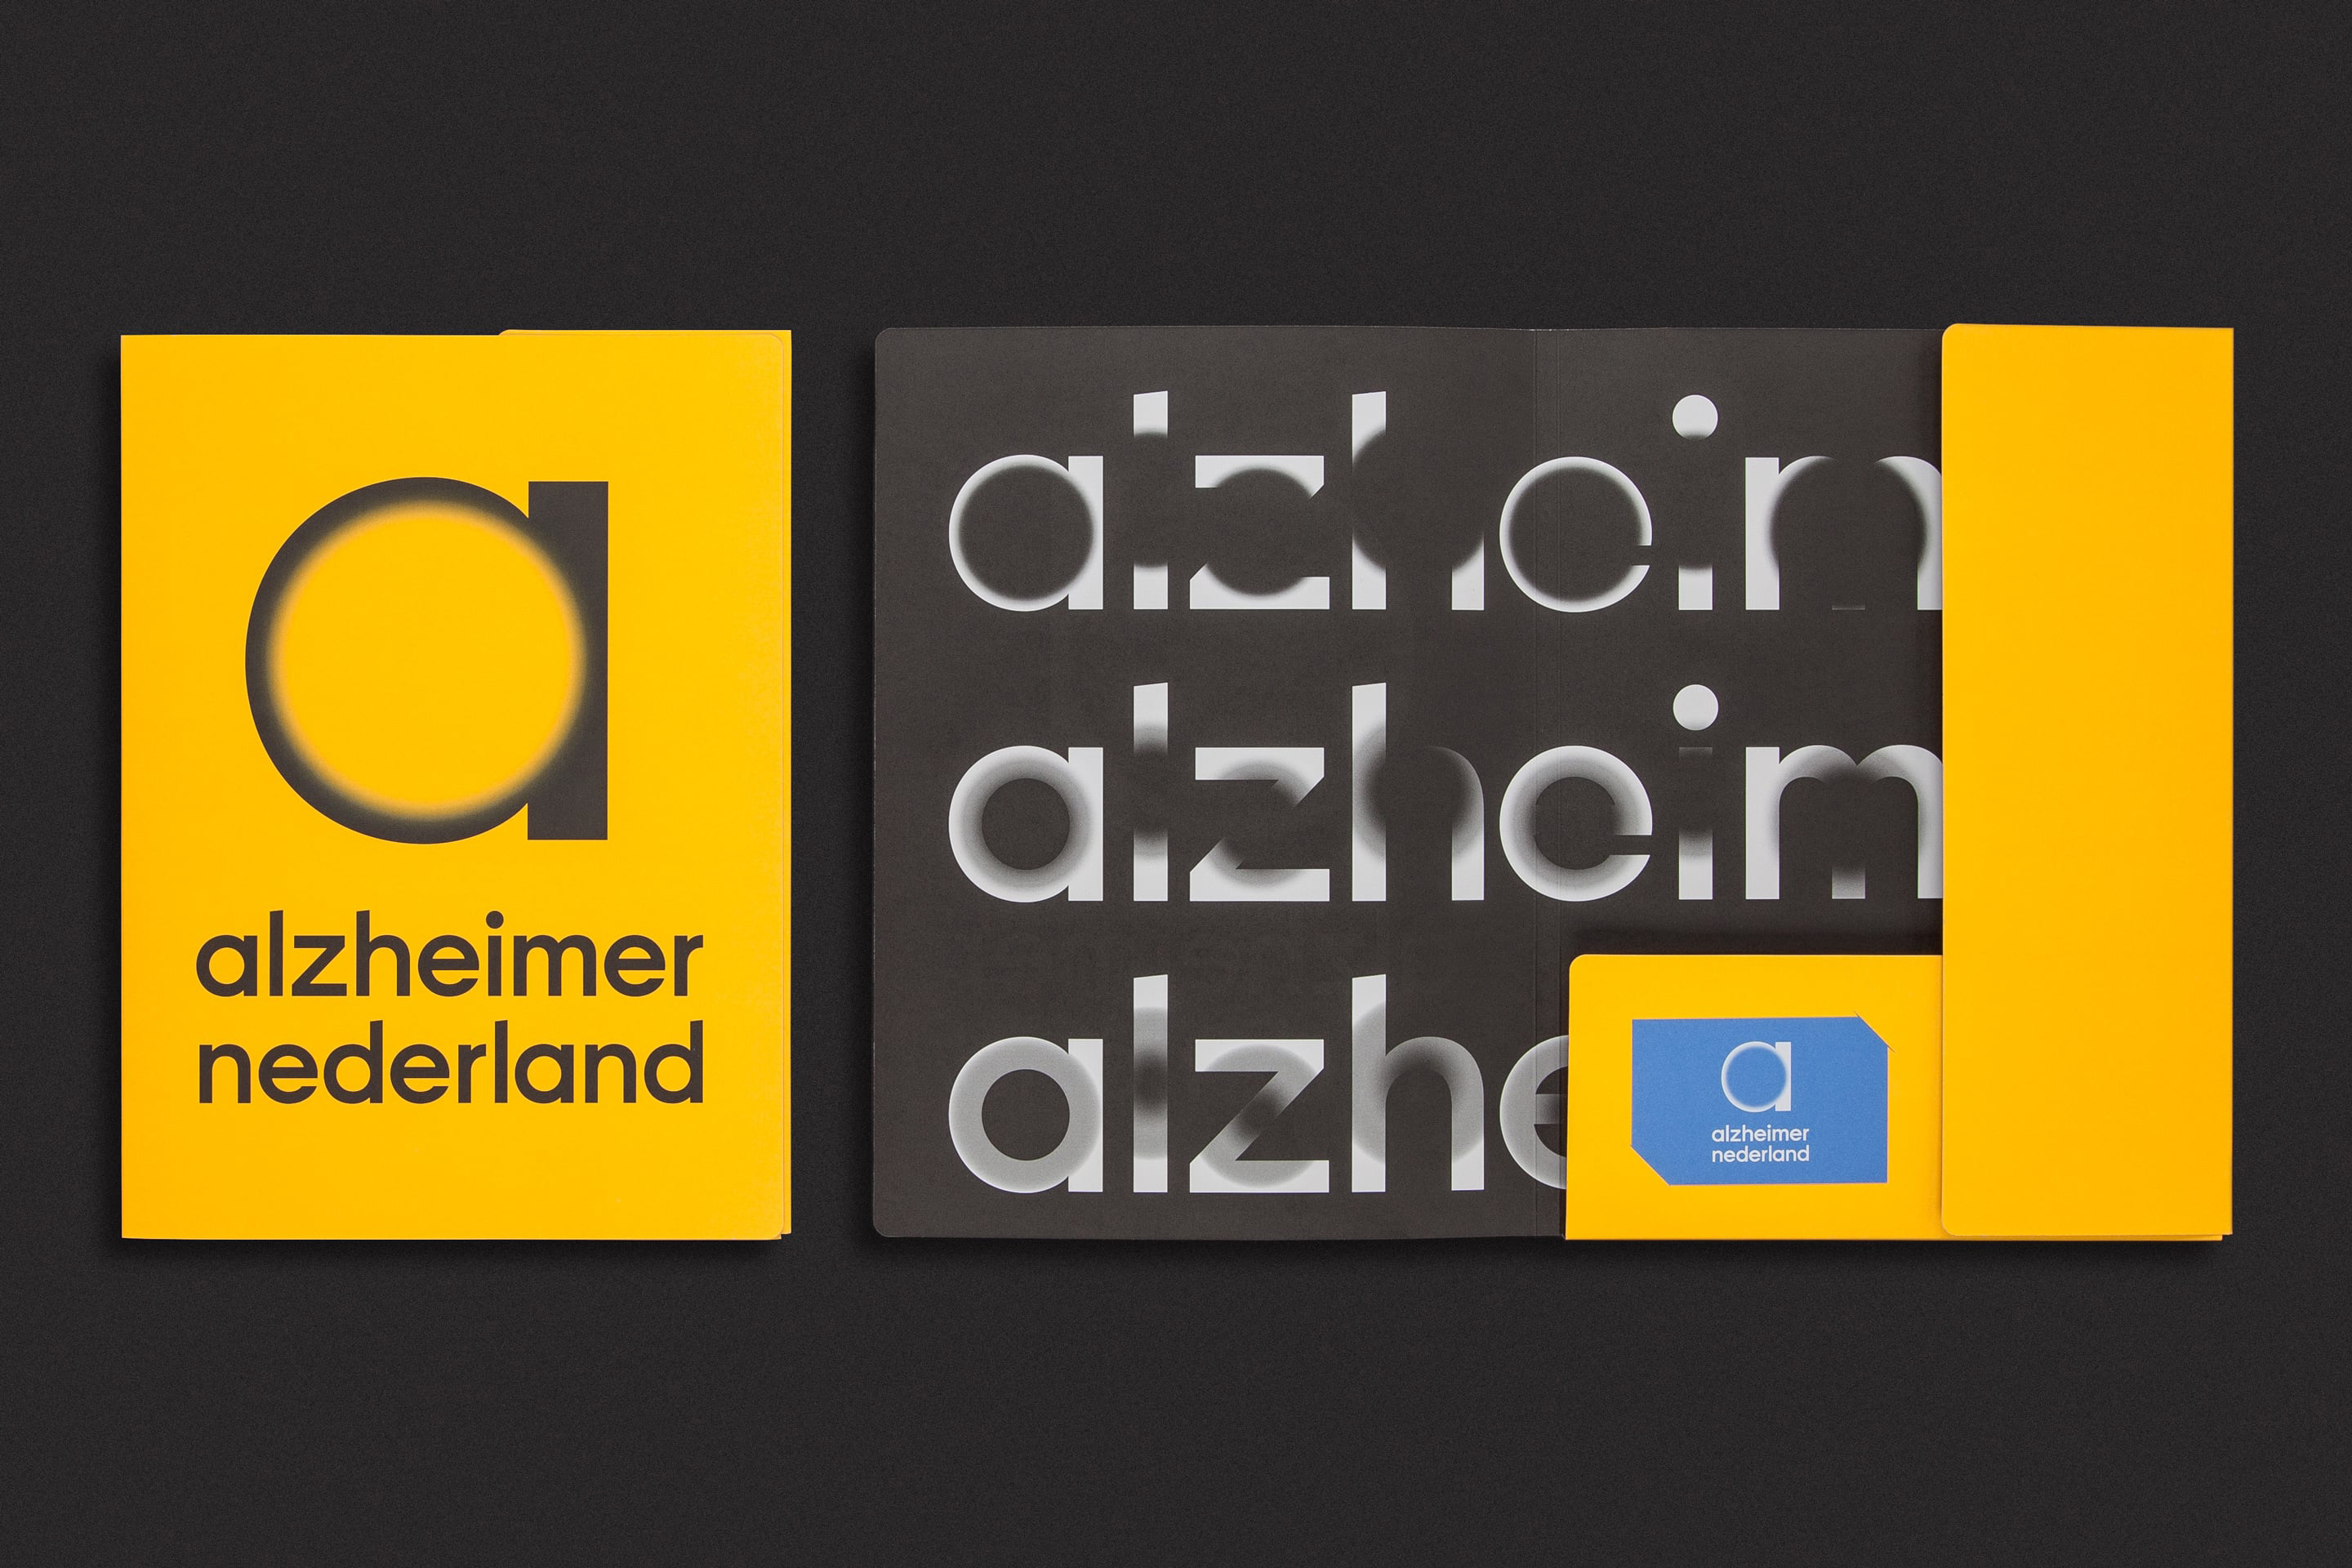 studio dumbar Alzheimer Nederland Brand identity folder design with fading typography and logo